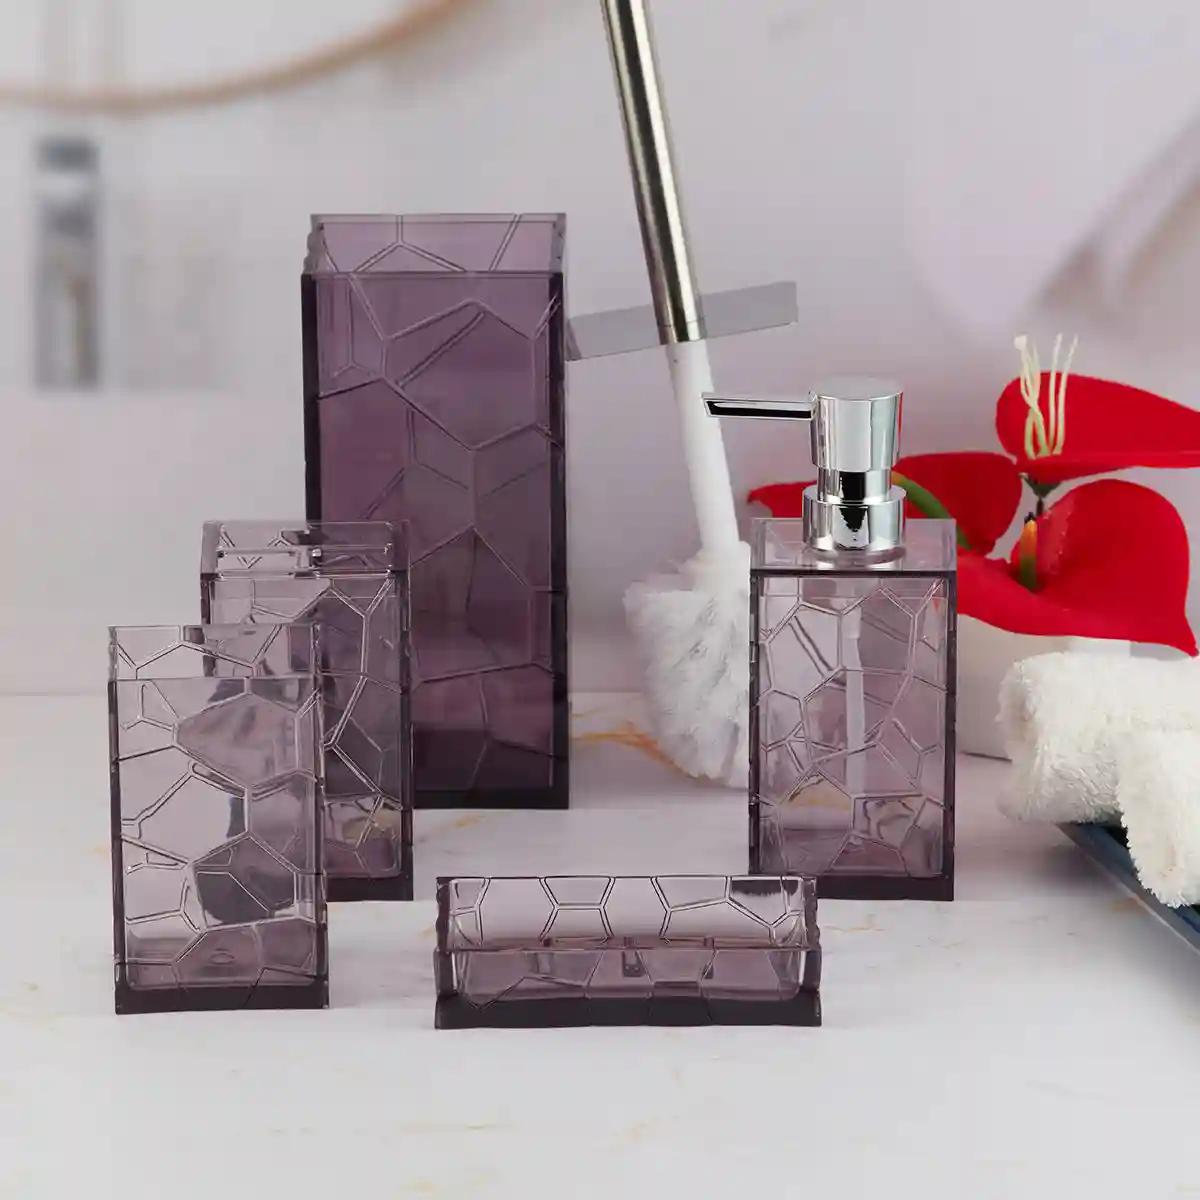 Kookee Acrylic Bathroom Accessories Set of 5, Modern Acrylic Bath Set with Liquid Soap Dispenser and Toothbrush Holder, Bathroom Accessory Set with Toilet Brush Gift Items for Home - Purple (10042)